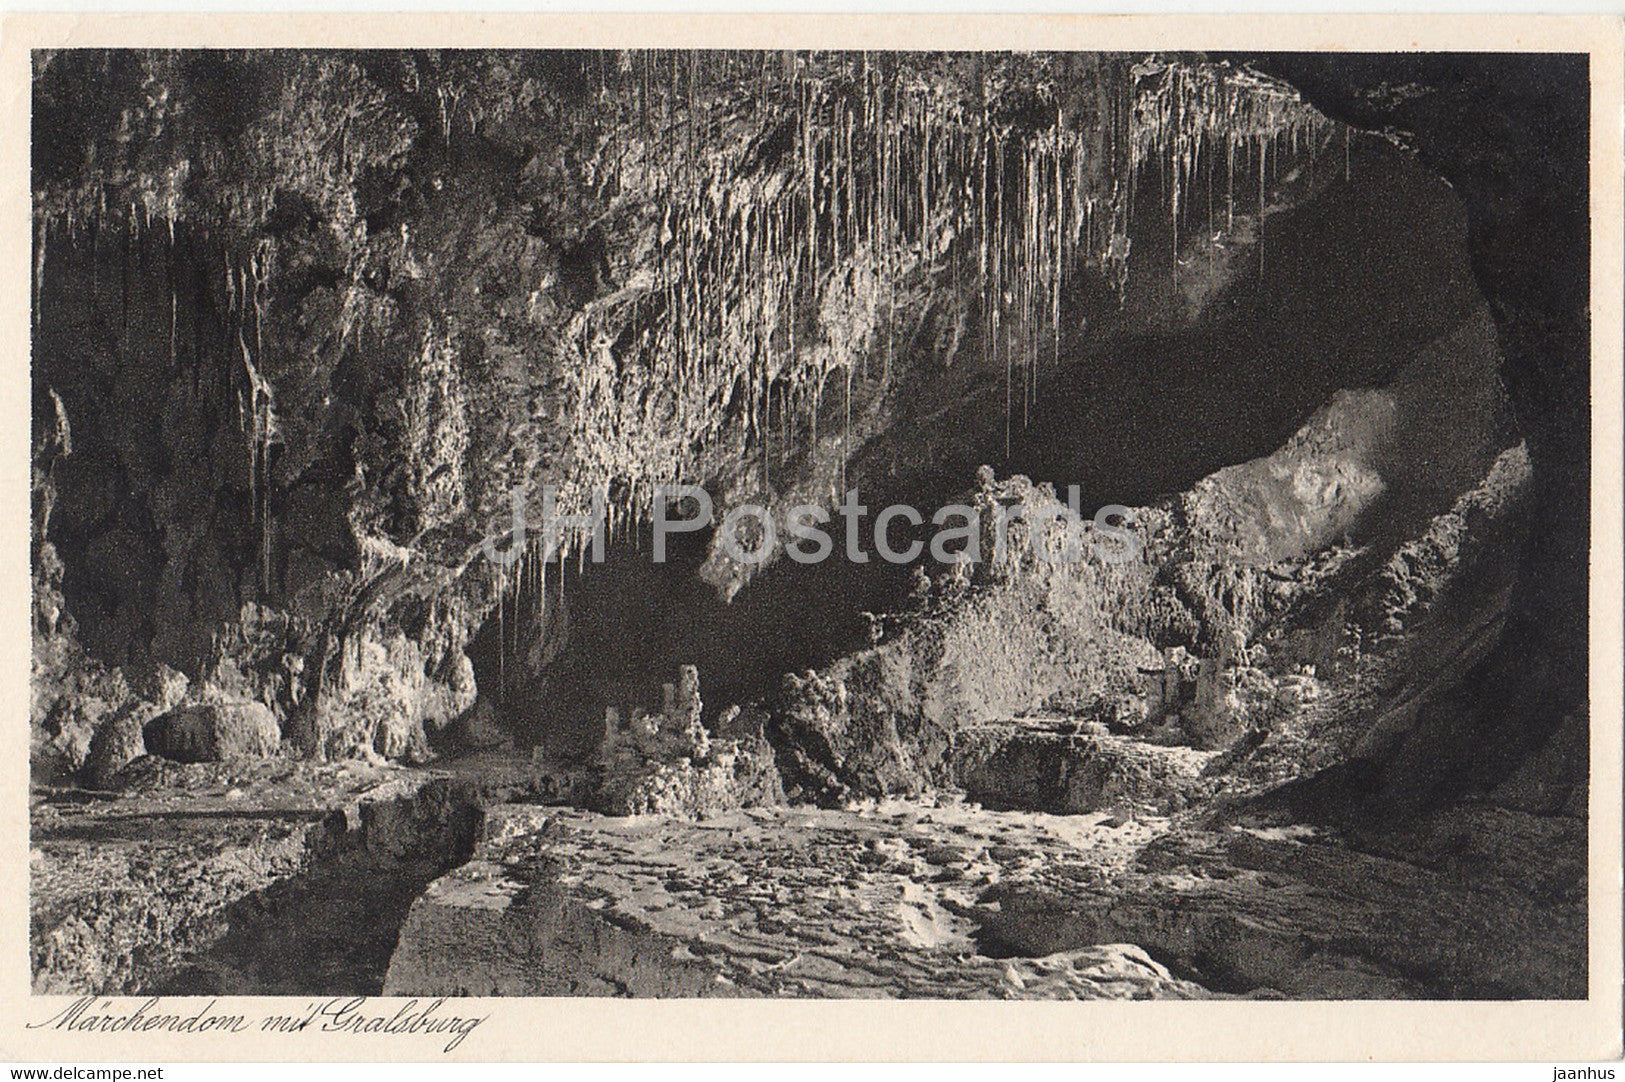 Saalfeld in Thuringen - Feengrotten - Marchendom mit Gralsburg - cave - 7 - old postcard - Germany - unused - JH Postcards